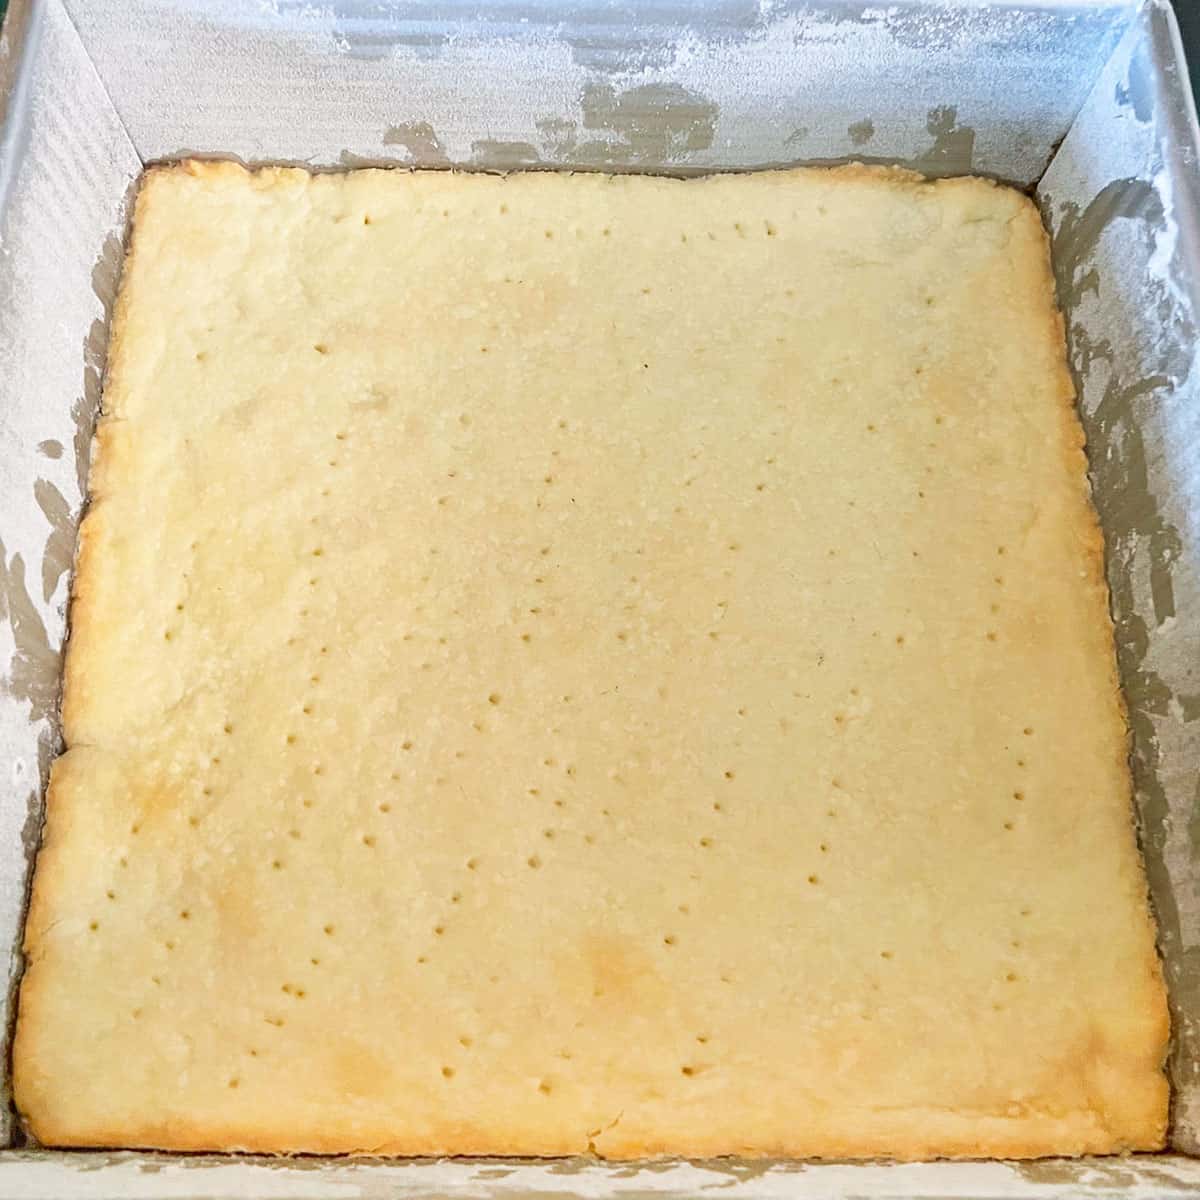 Shortbread baked in an 8X8 pan.